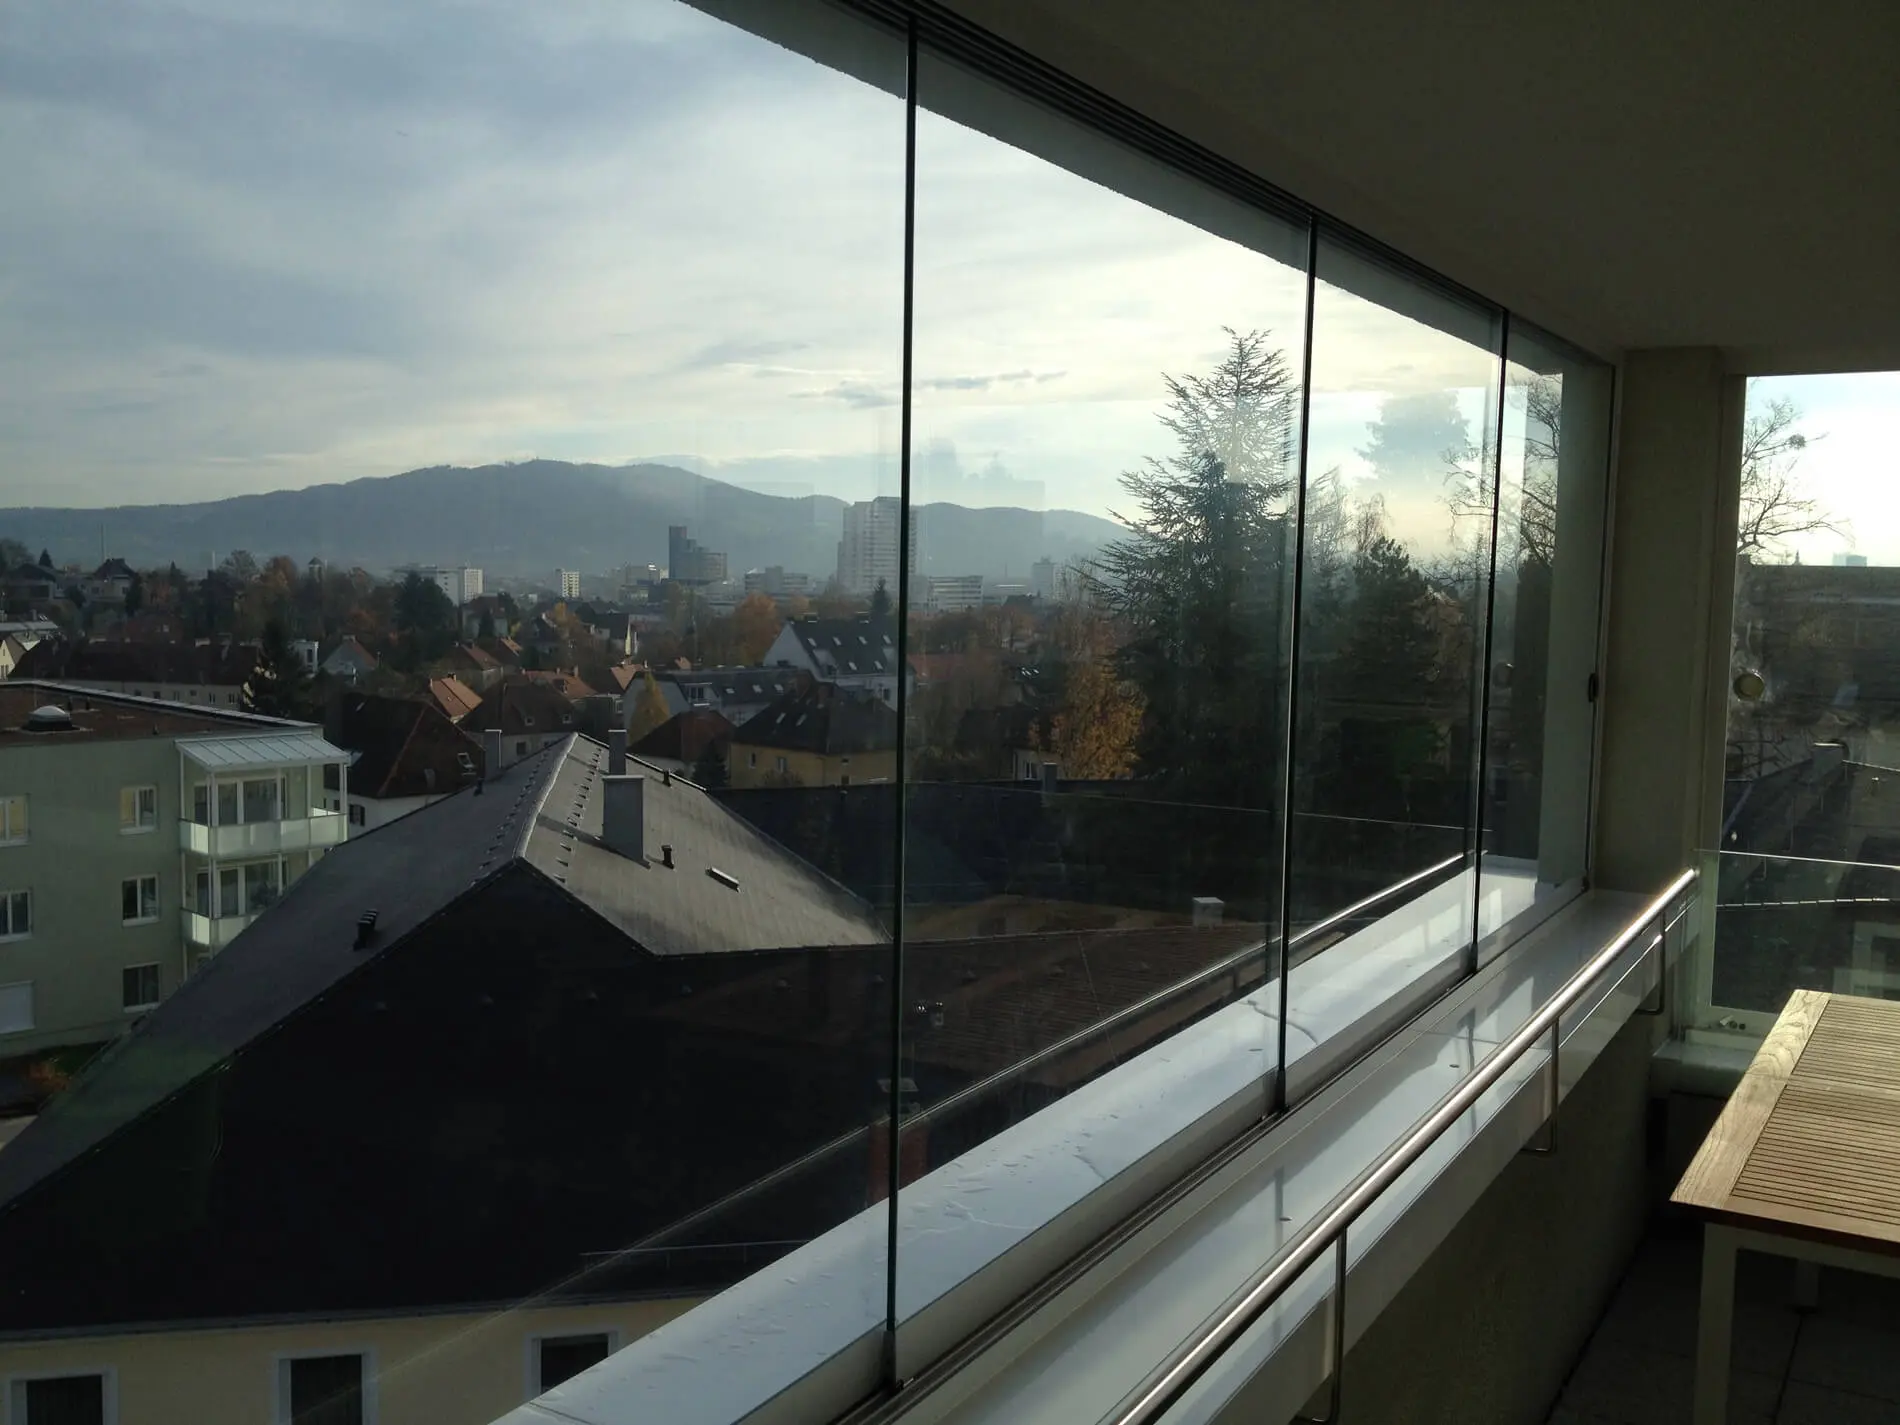 https://www.wintergarten-schmidinger.at/cms/wp-content/uploads/rahmenlose-schiebefenster-fuer-balkon.jpg.webp